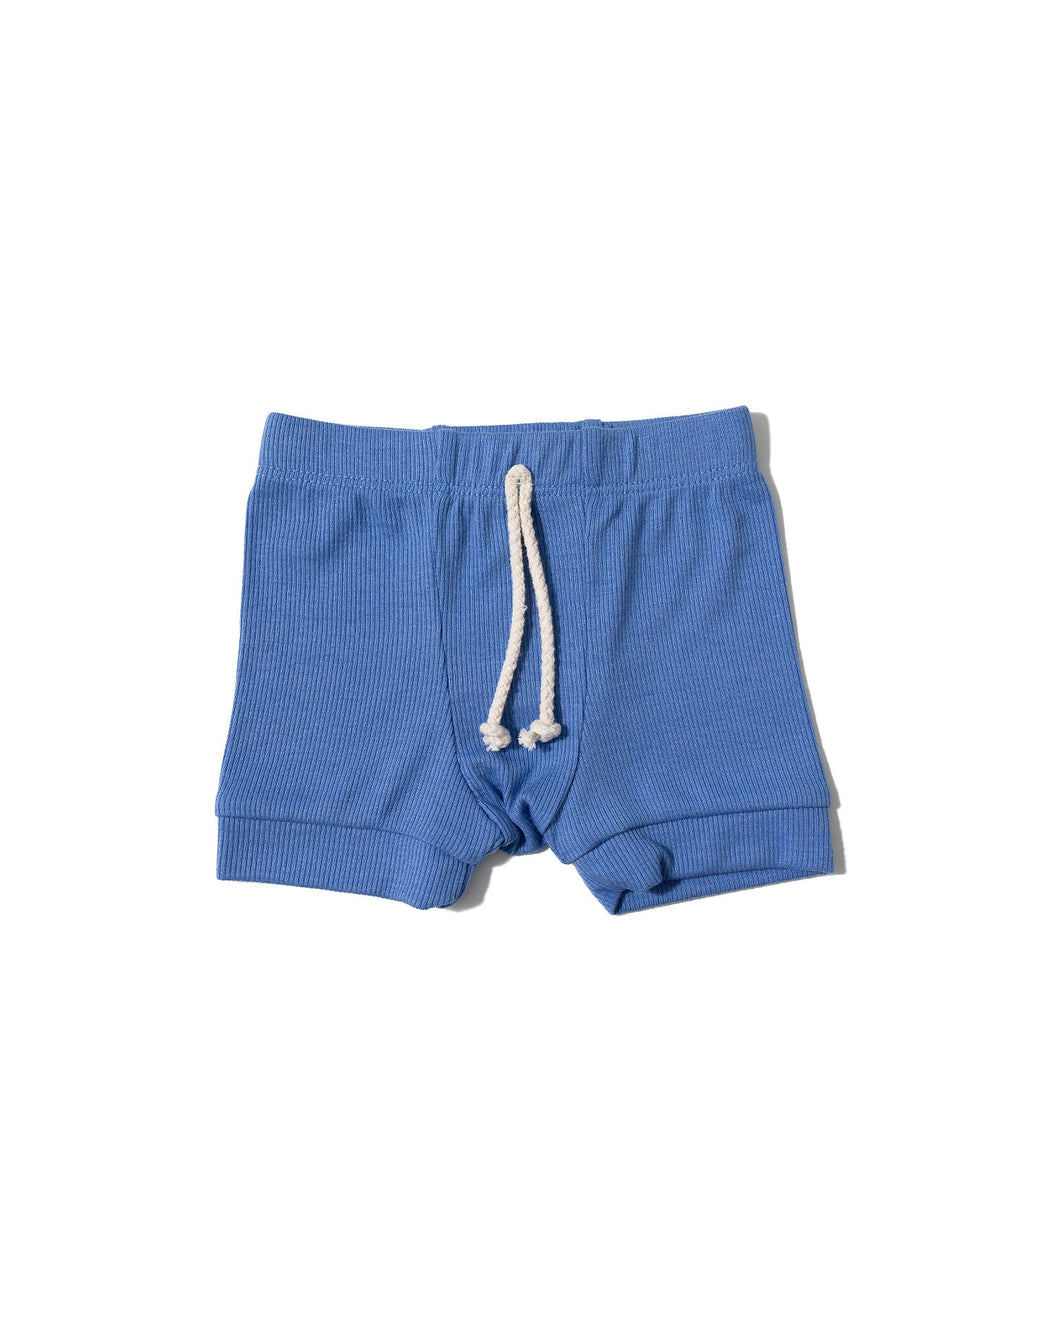 rib knit shorts - tidal